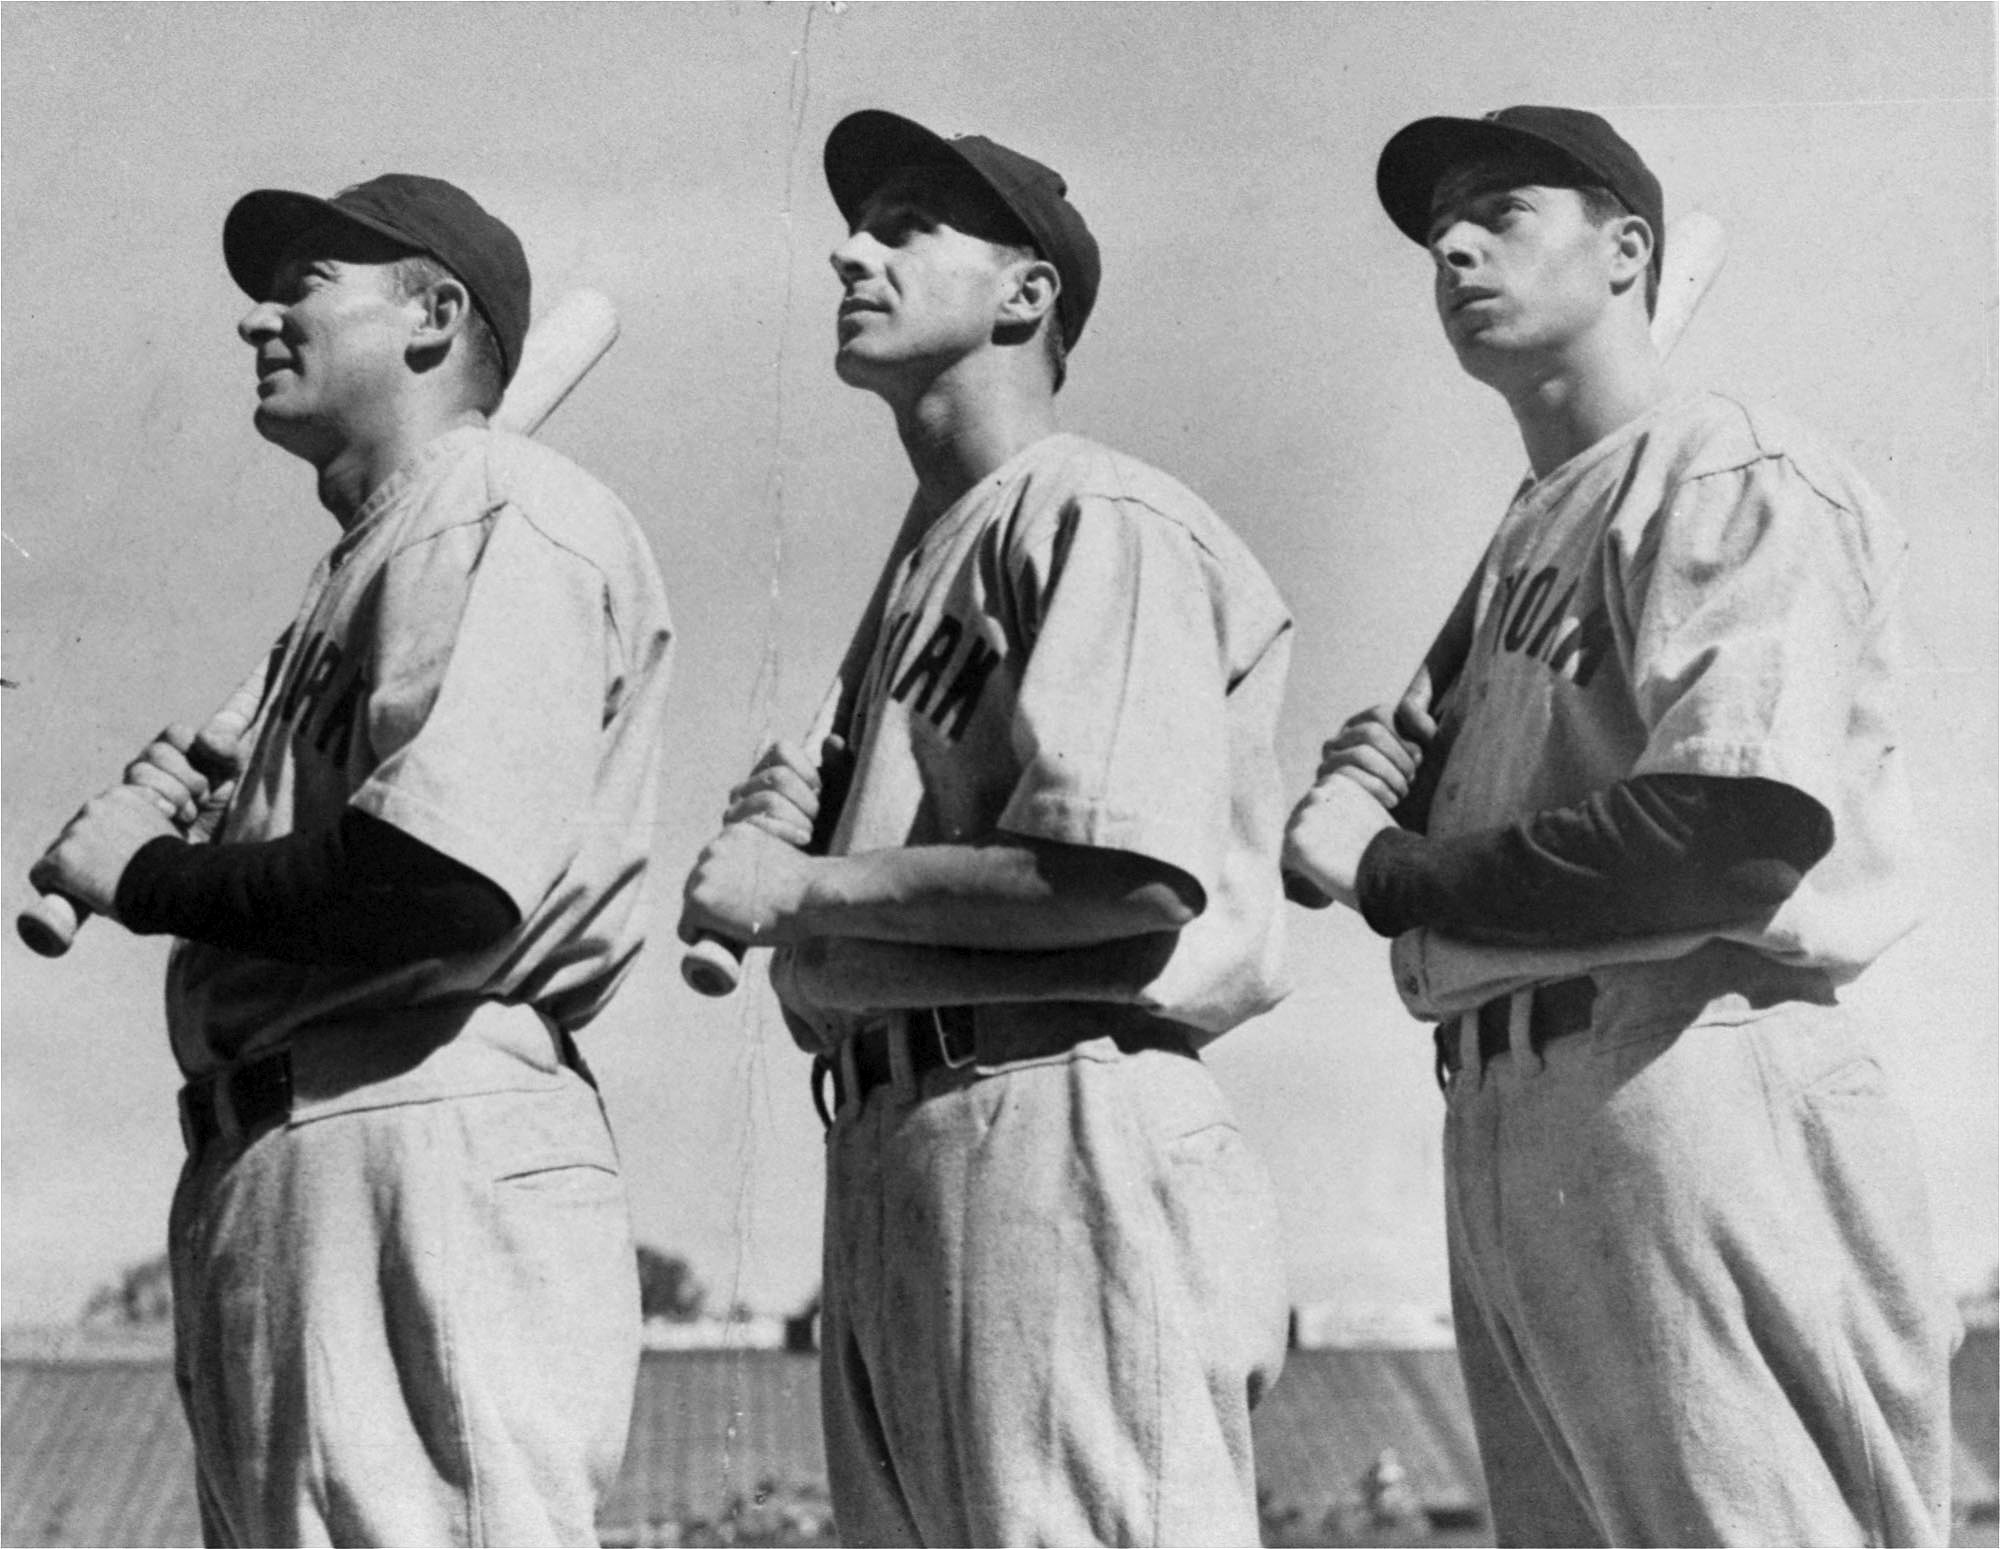 New York Yankees Tony Lazzeri, Frank Crosetti and Joe DiMaggio before the start of the 1936 World Series.